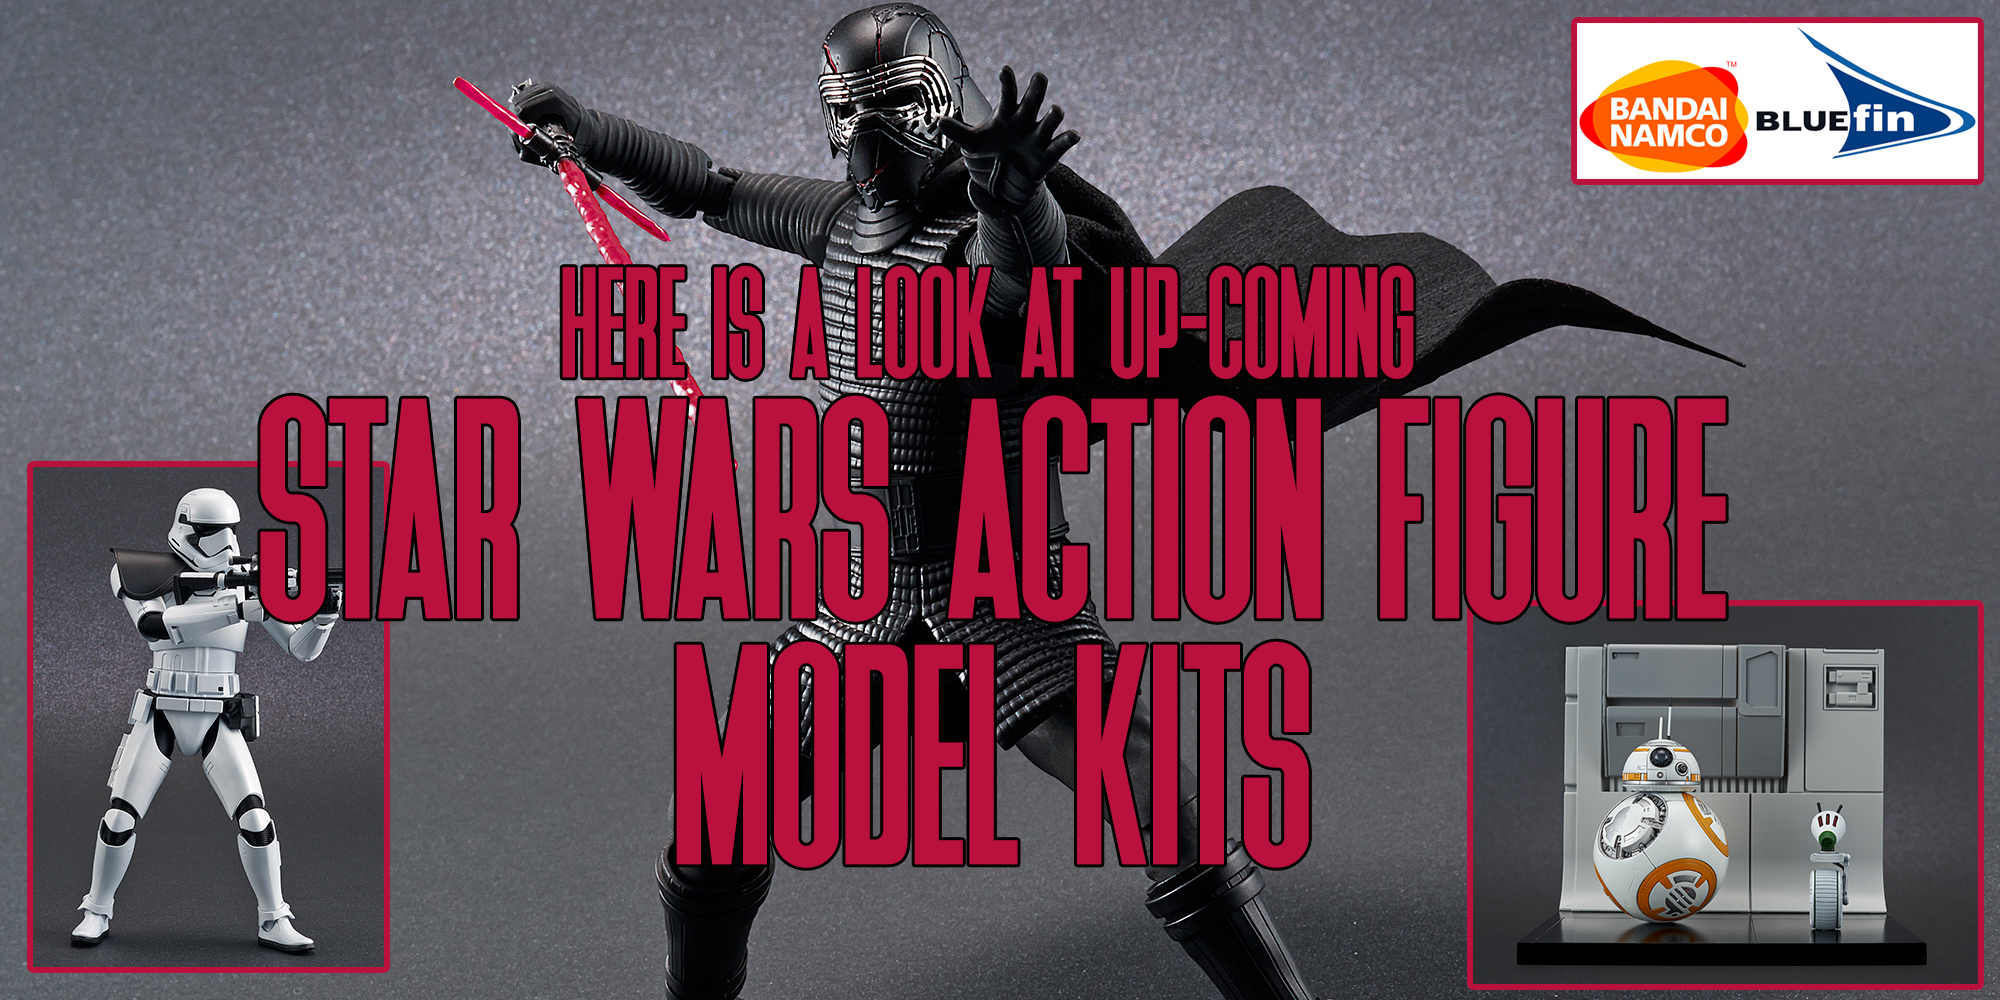 A Look At Up-Coming Star Wars Action Figure Model Kits By Bandai